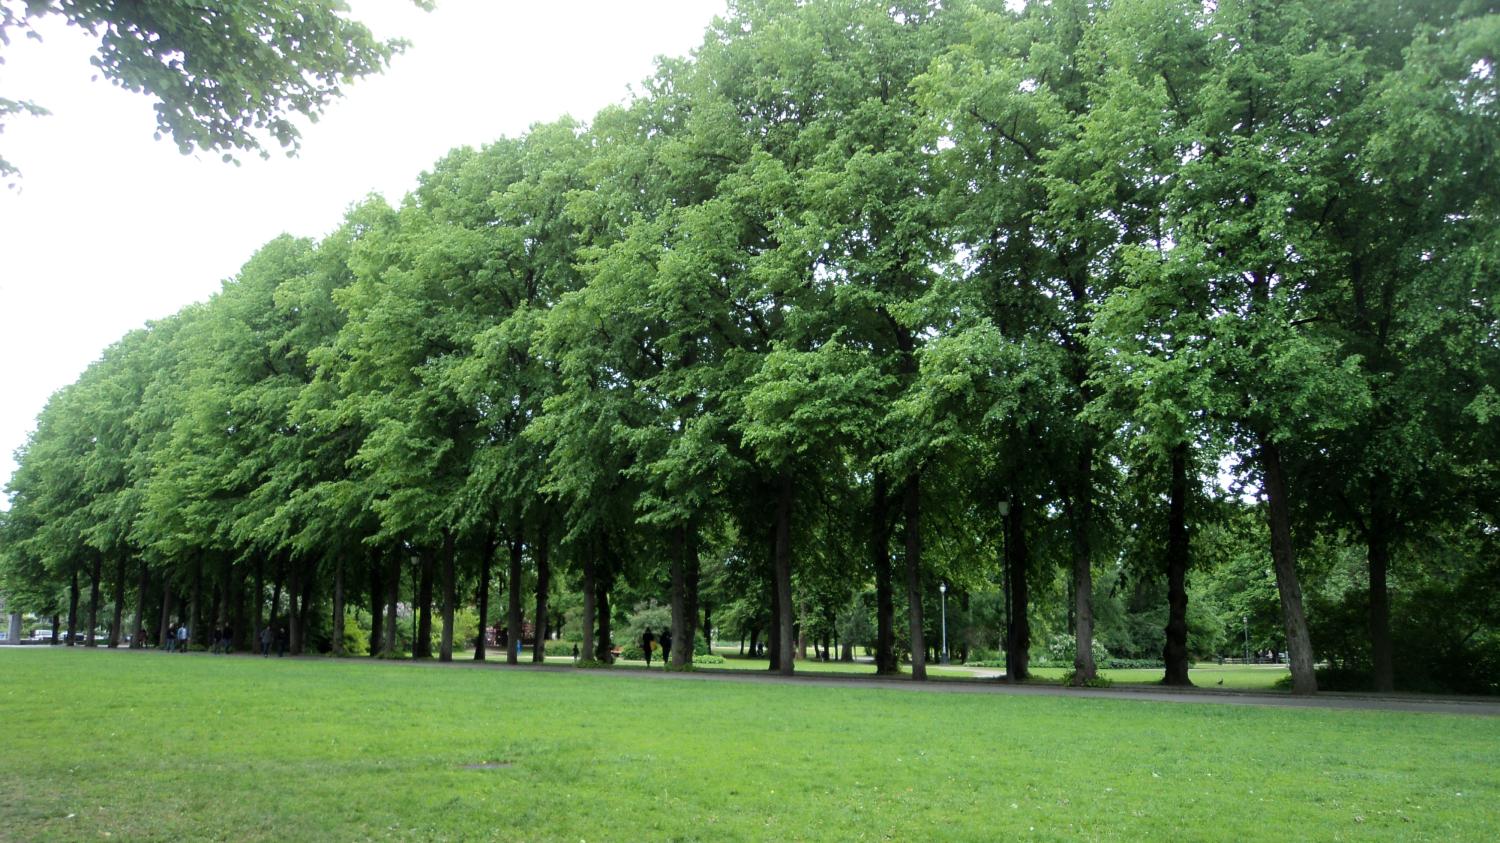 Tree-lined park